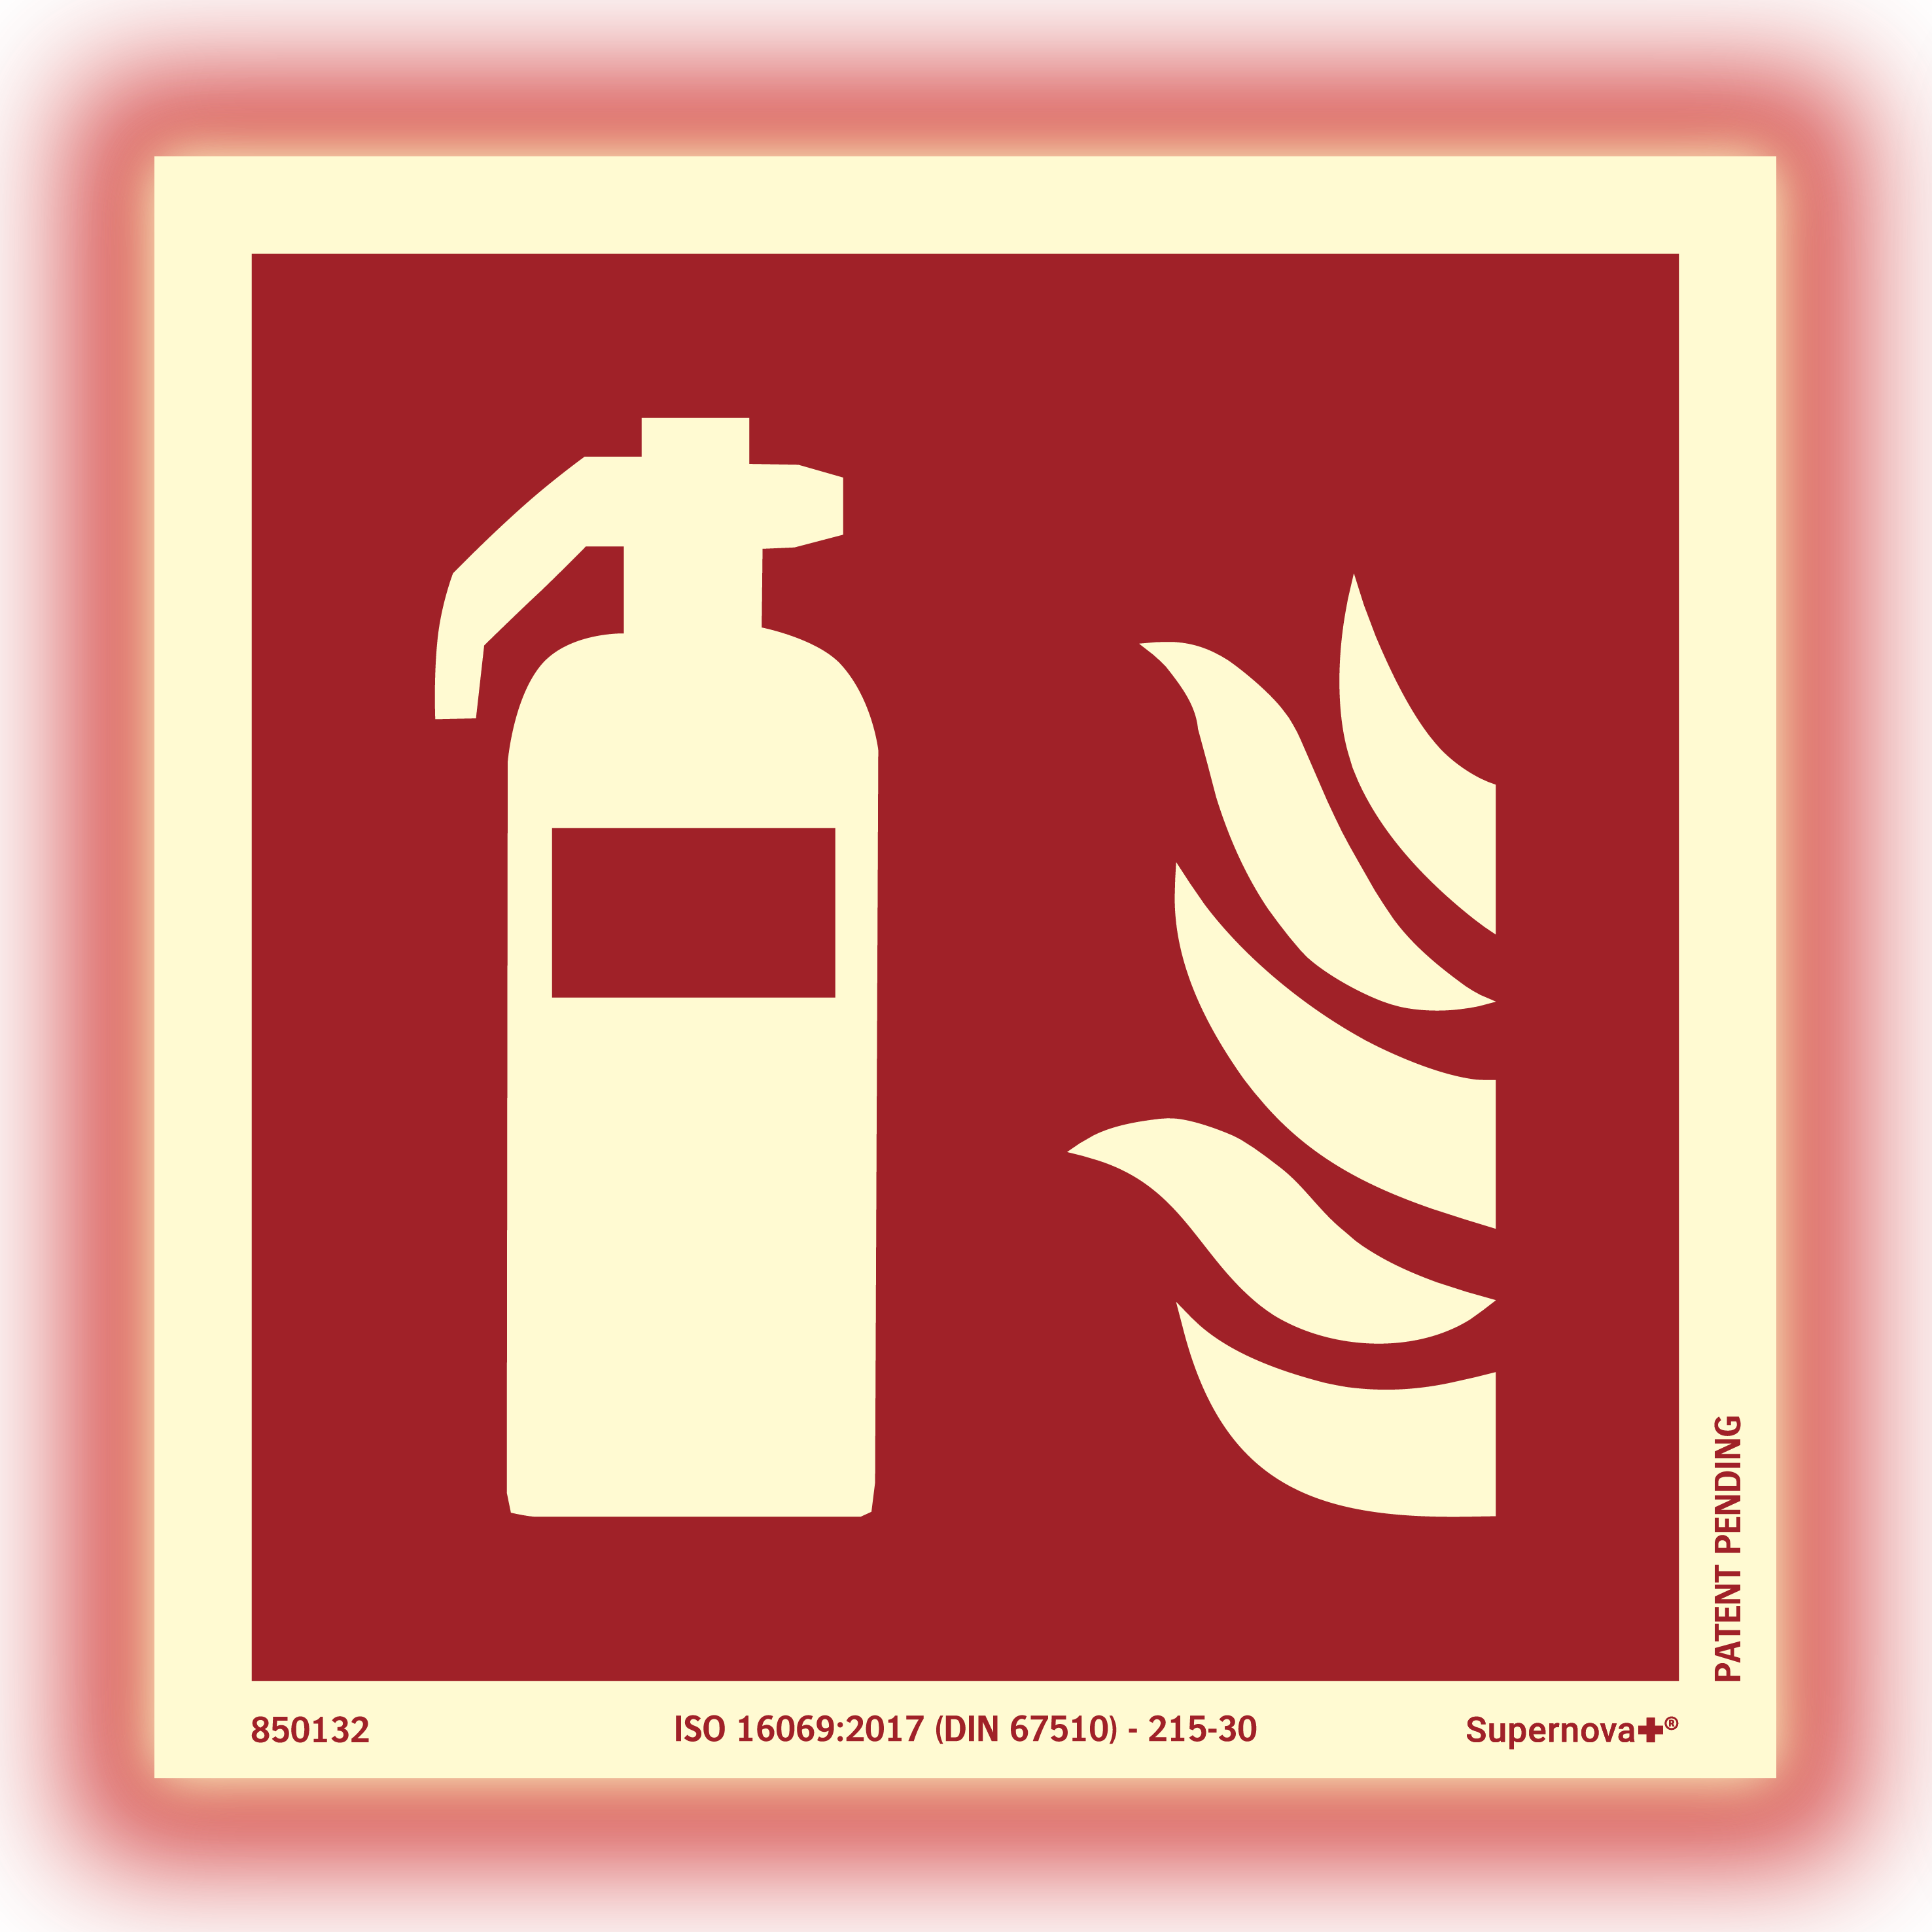 Supernova+® Fire extinguisher